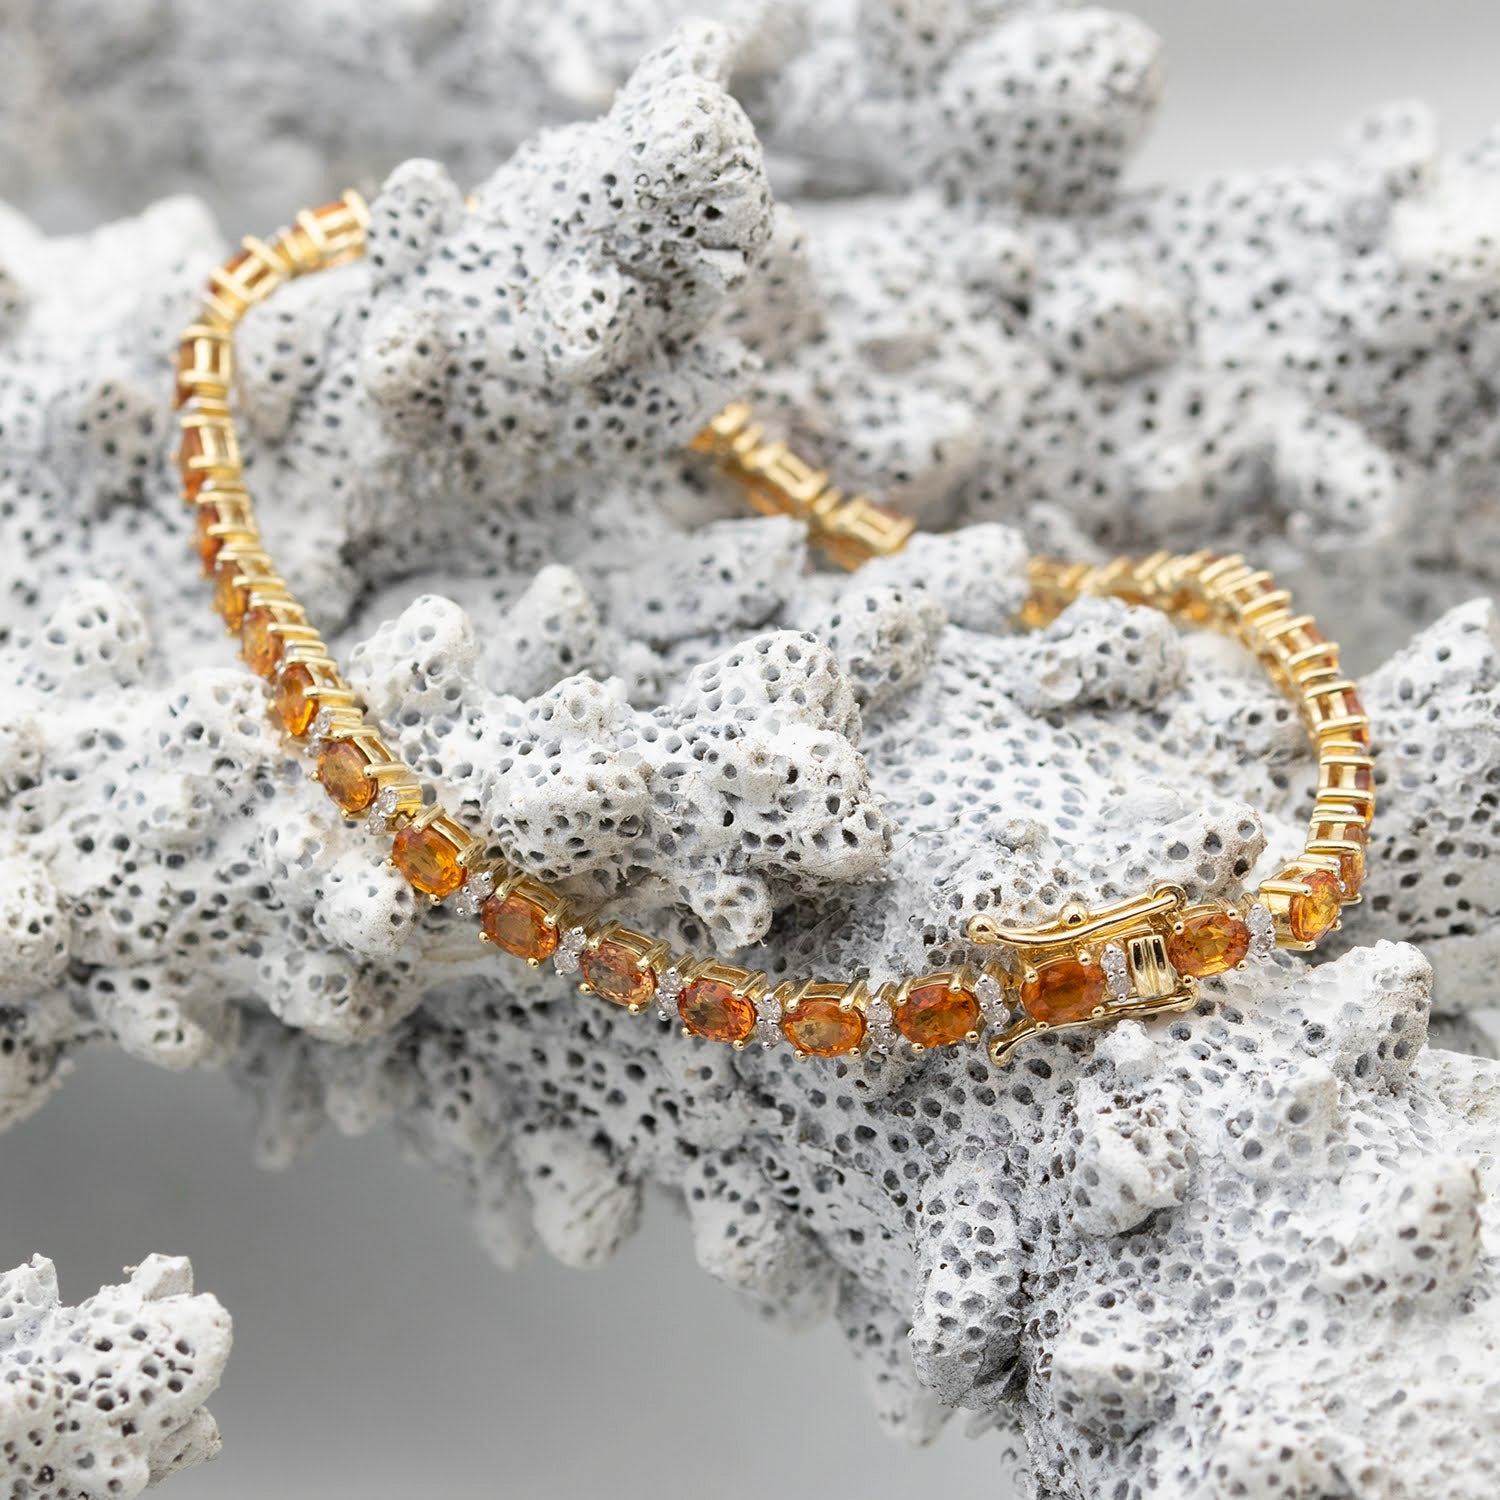 Oval Cut Yellow Sapphire & Diamonds 8.21ct Bracelet – London Collection